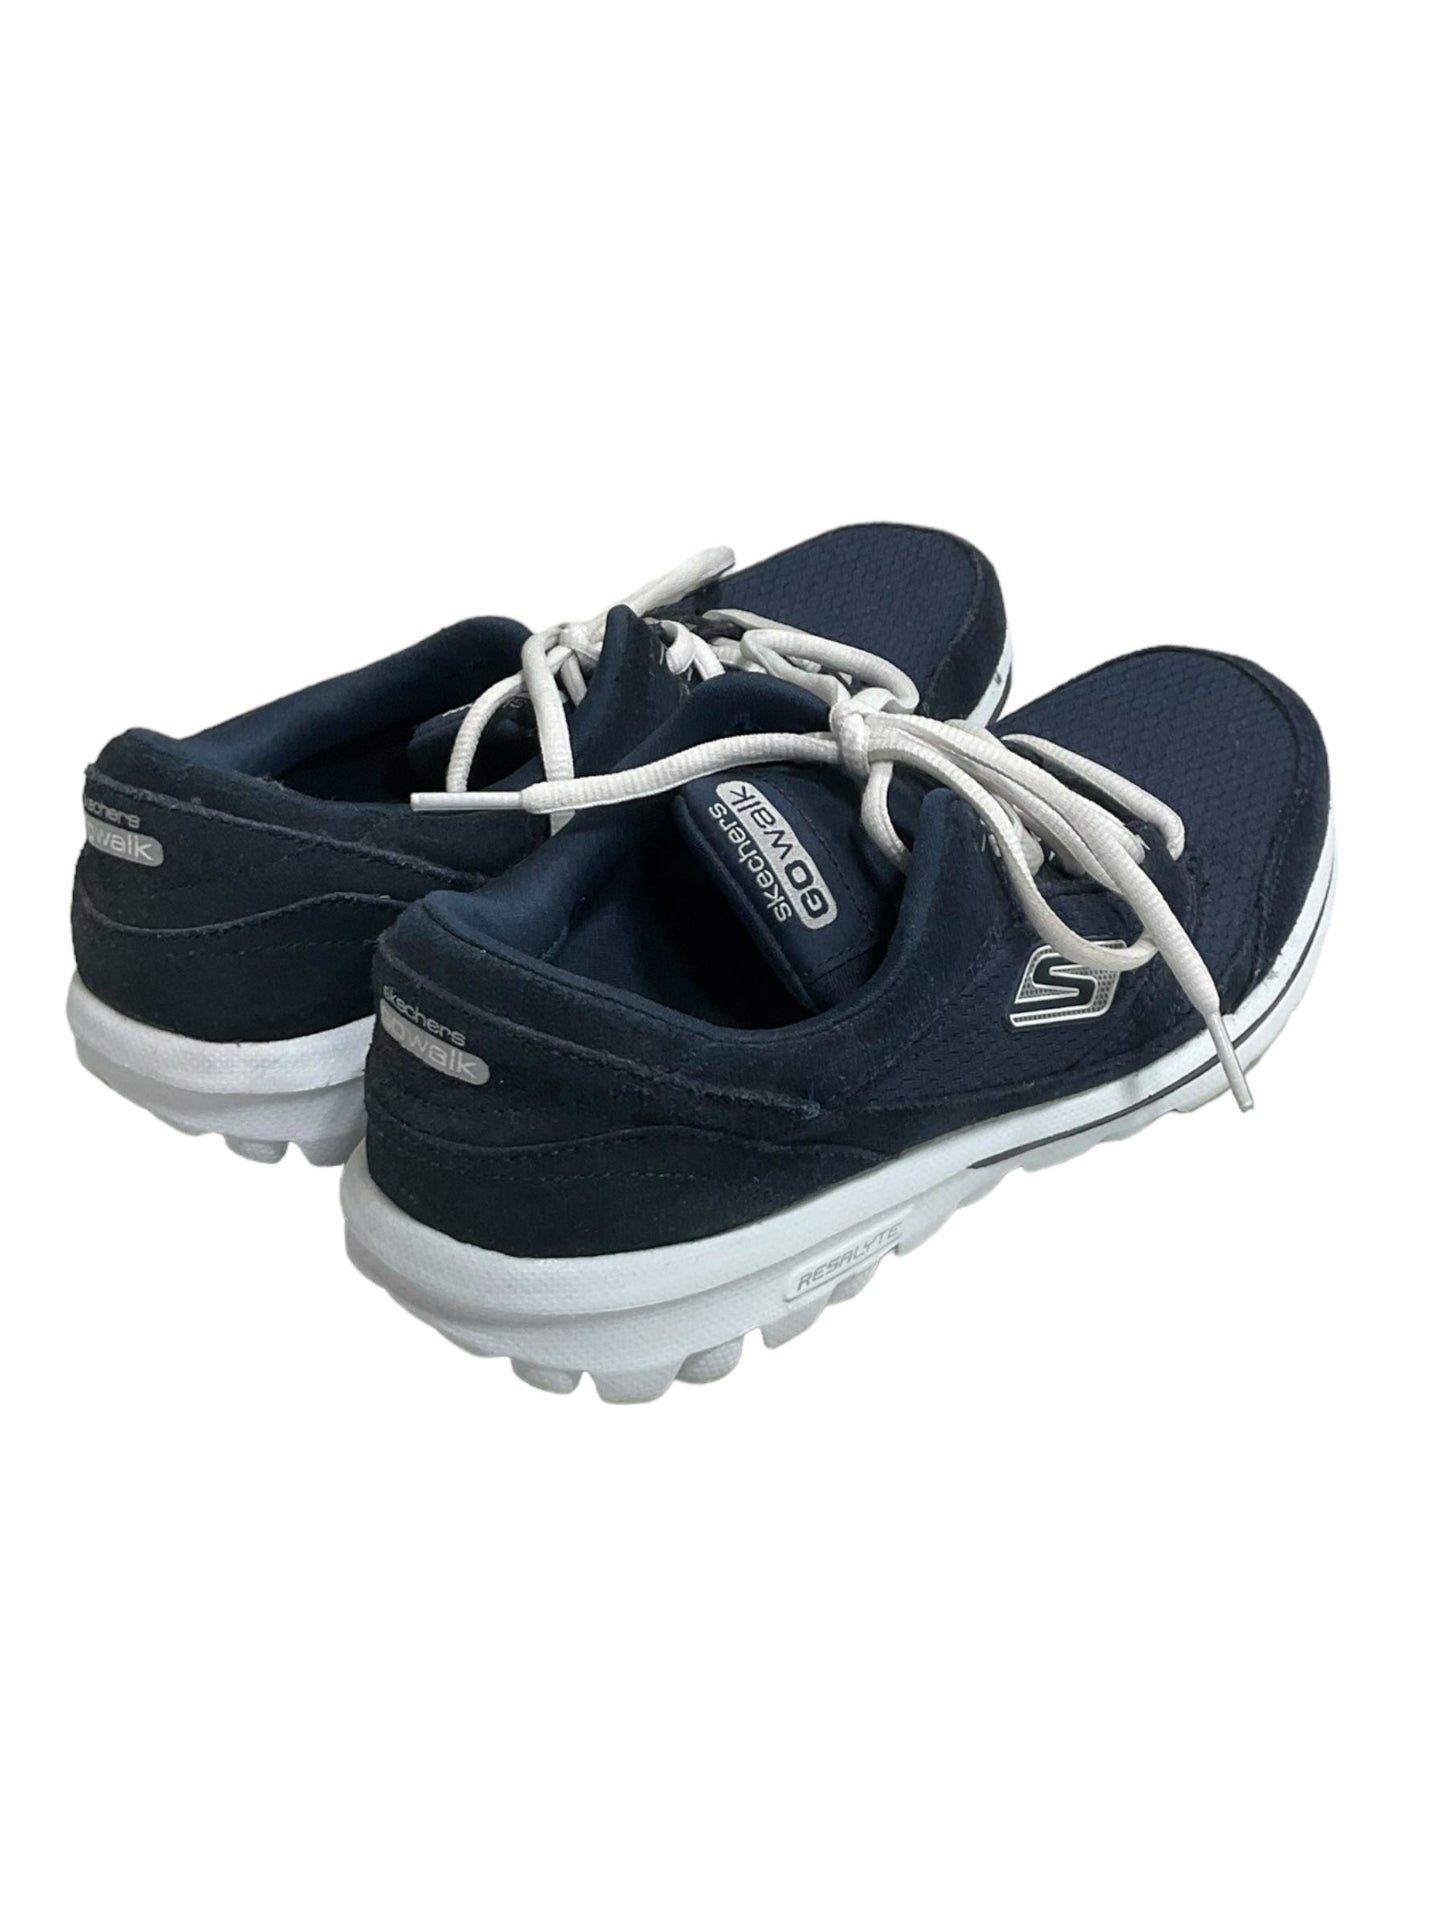 Blue Shoes Athletic Skechers, Size 8